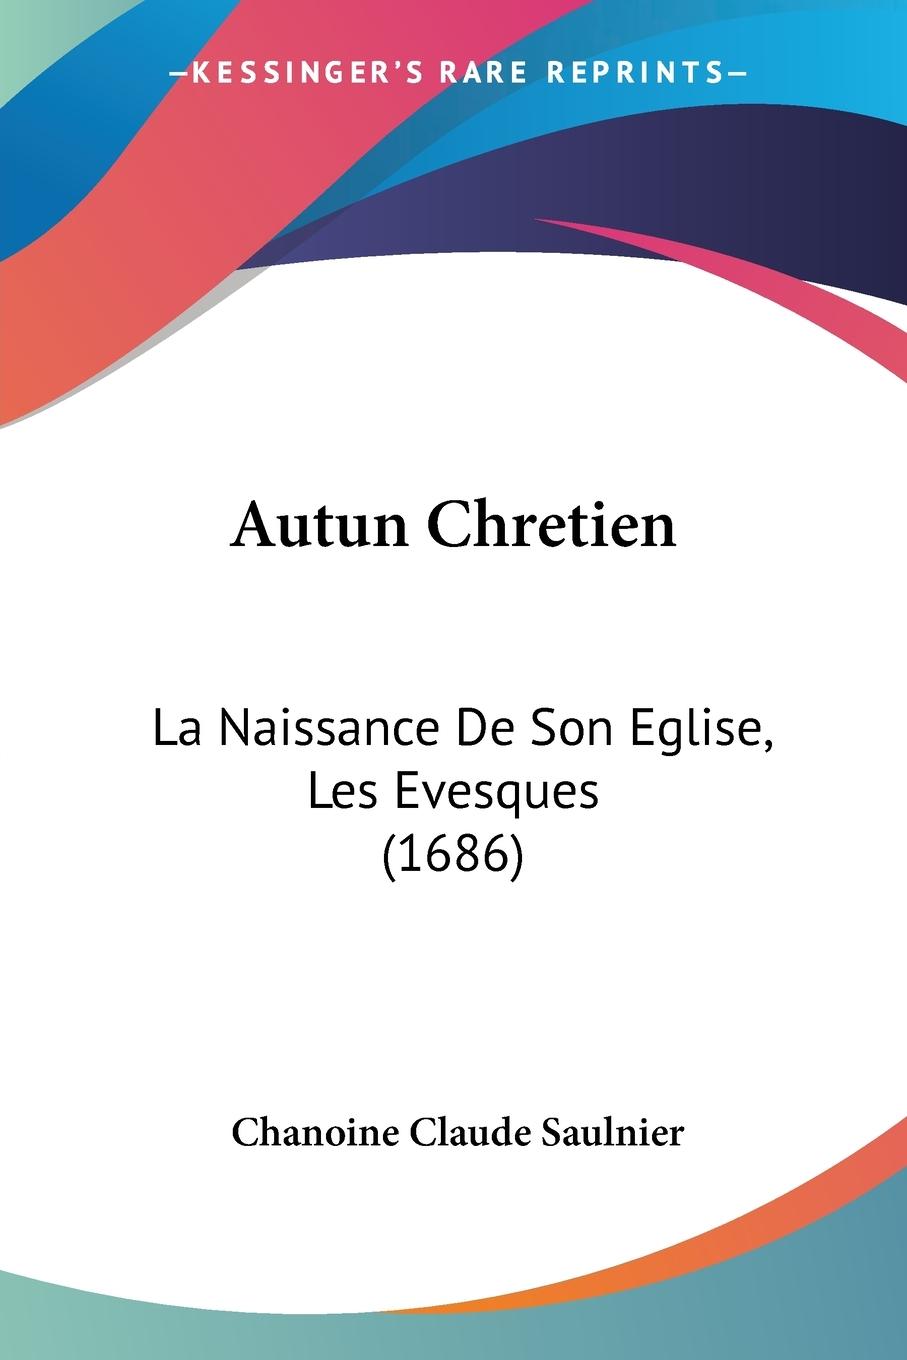 Autun Chretien - Saulnier, Chanoine Claude